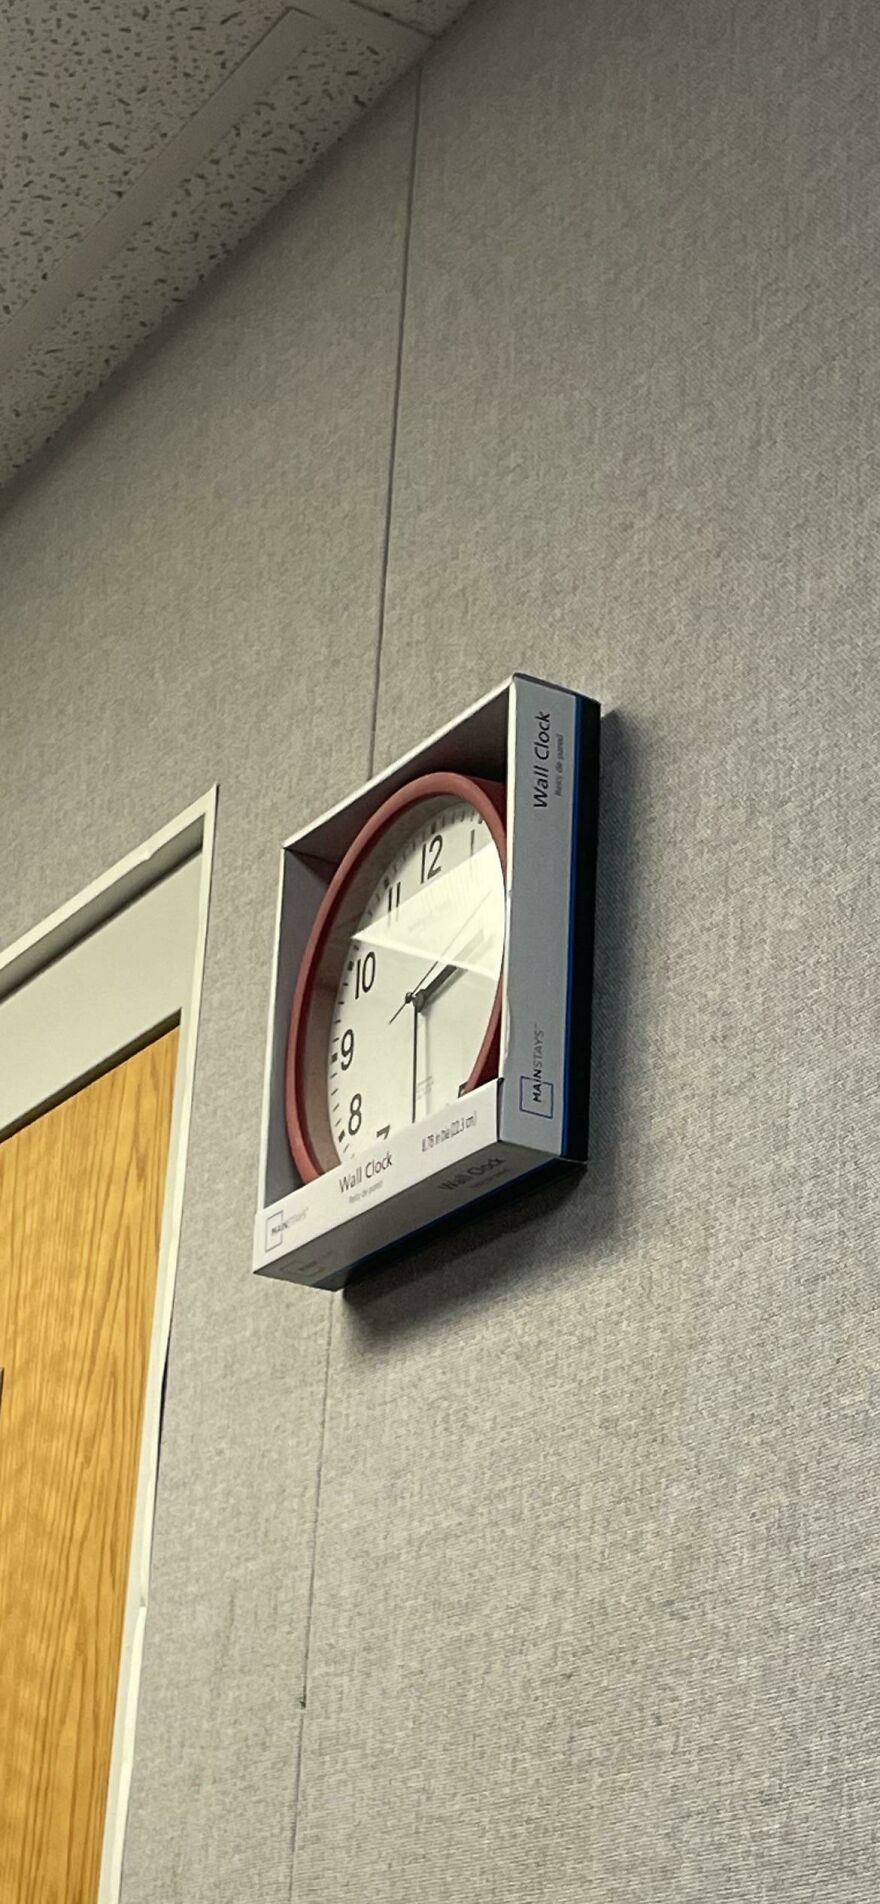 The Clock In My School’s Band Practice Room